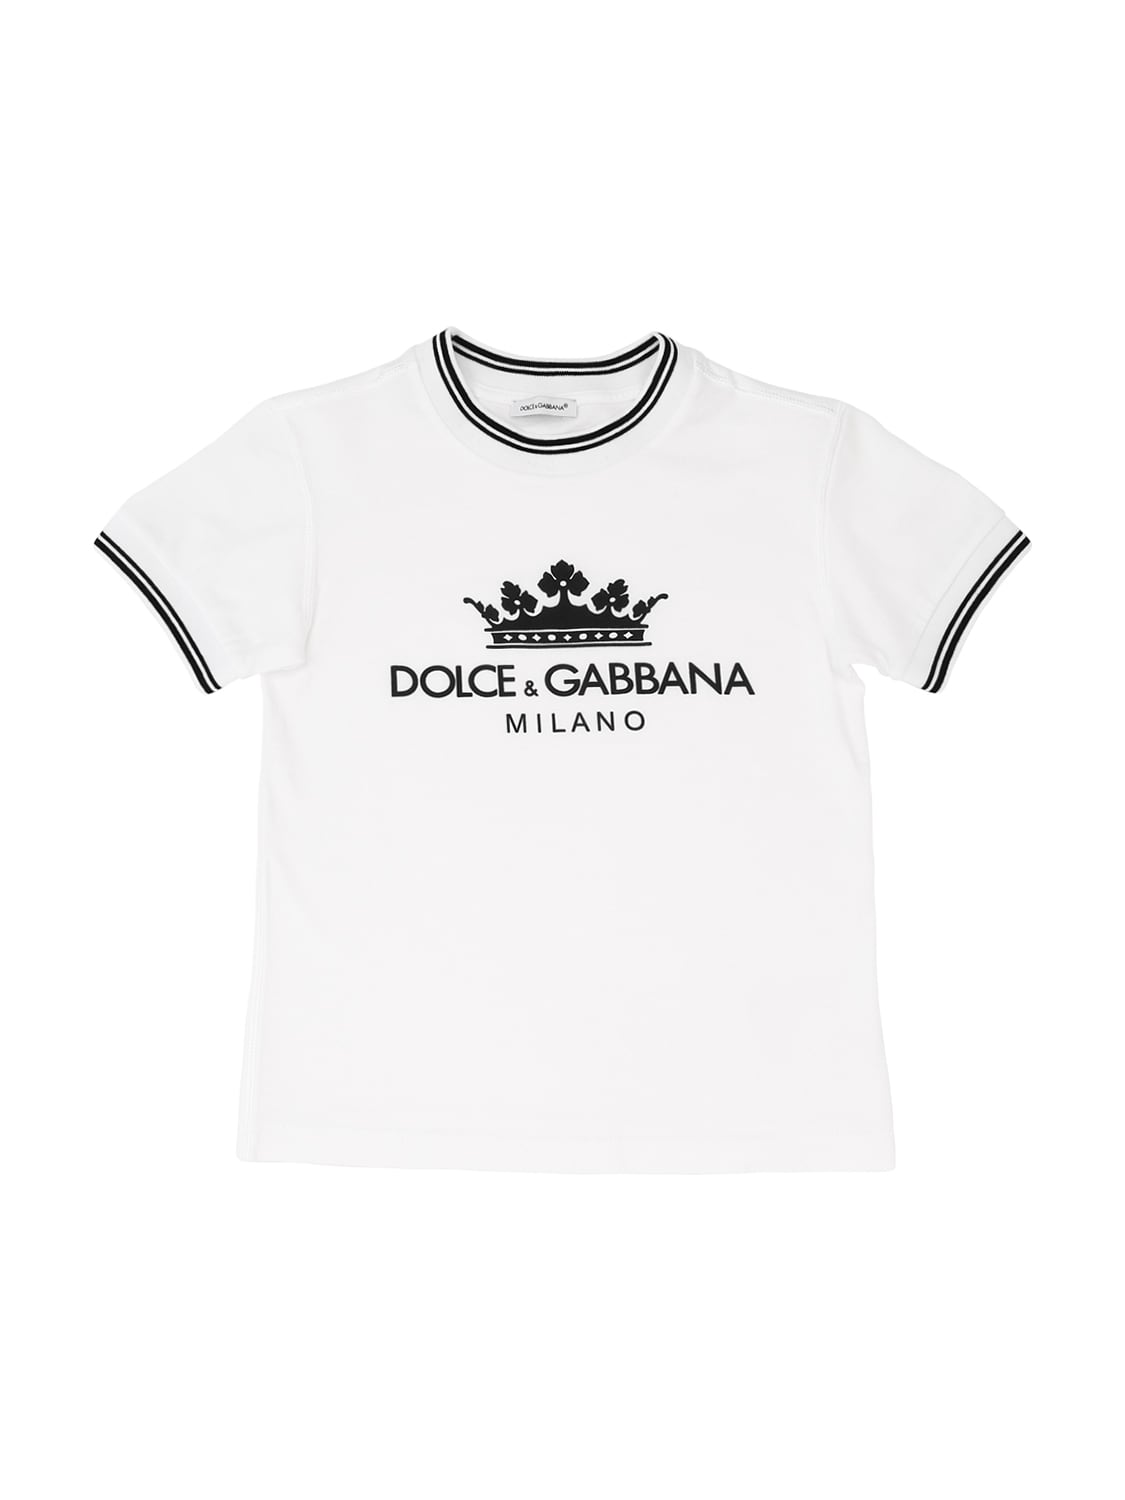 Дольче габбана слова. Dolce Gabbana Milano футболка. Dolce Gabbana белая Milano футболка. Дольче Габбана Милано футболка. Рубашка Дольче энд Габбана.